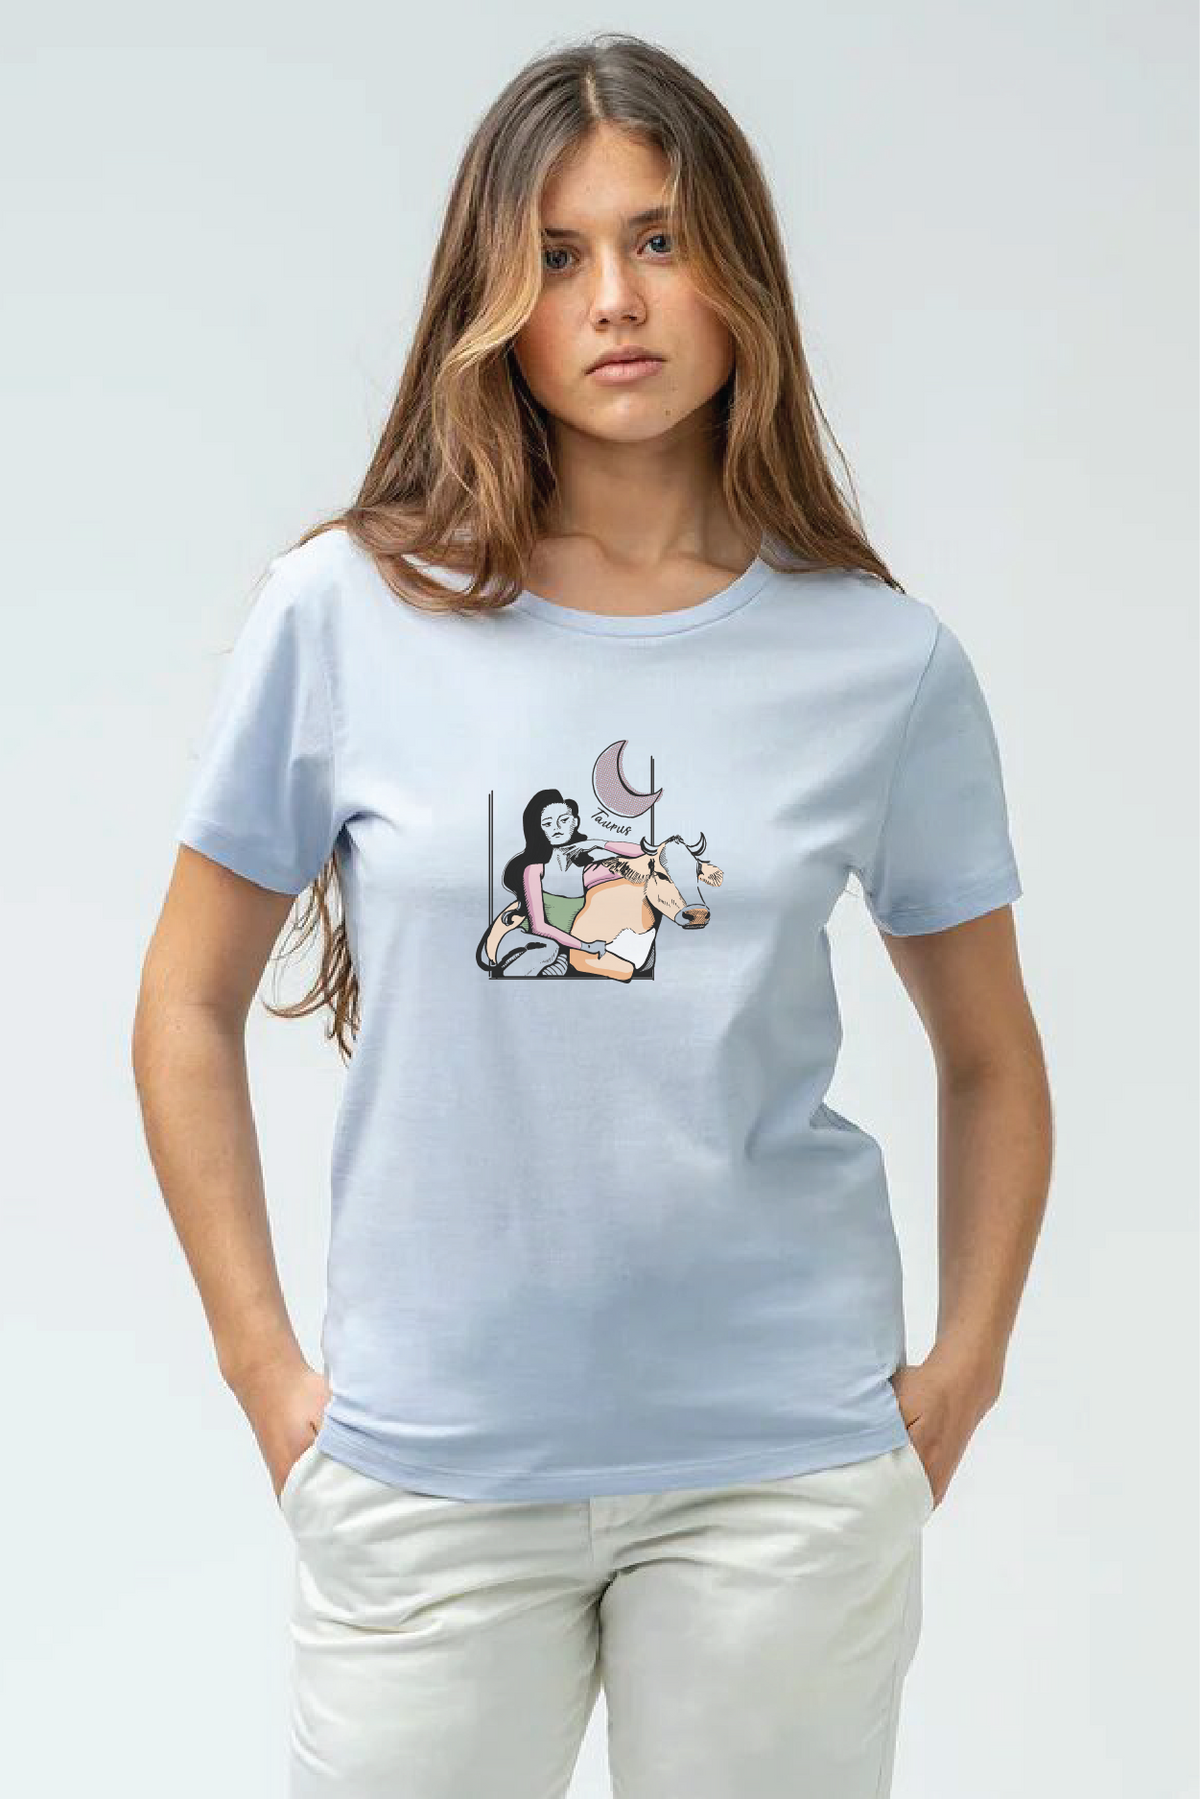 Taurus - Unisex Organic Cotton T-Shirt